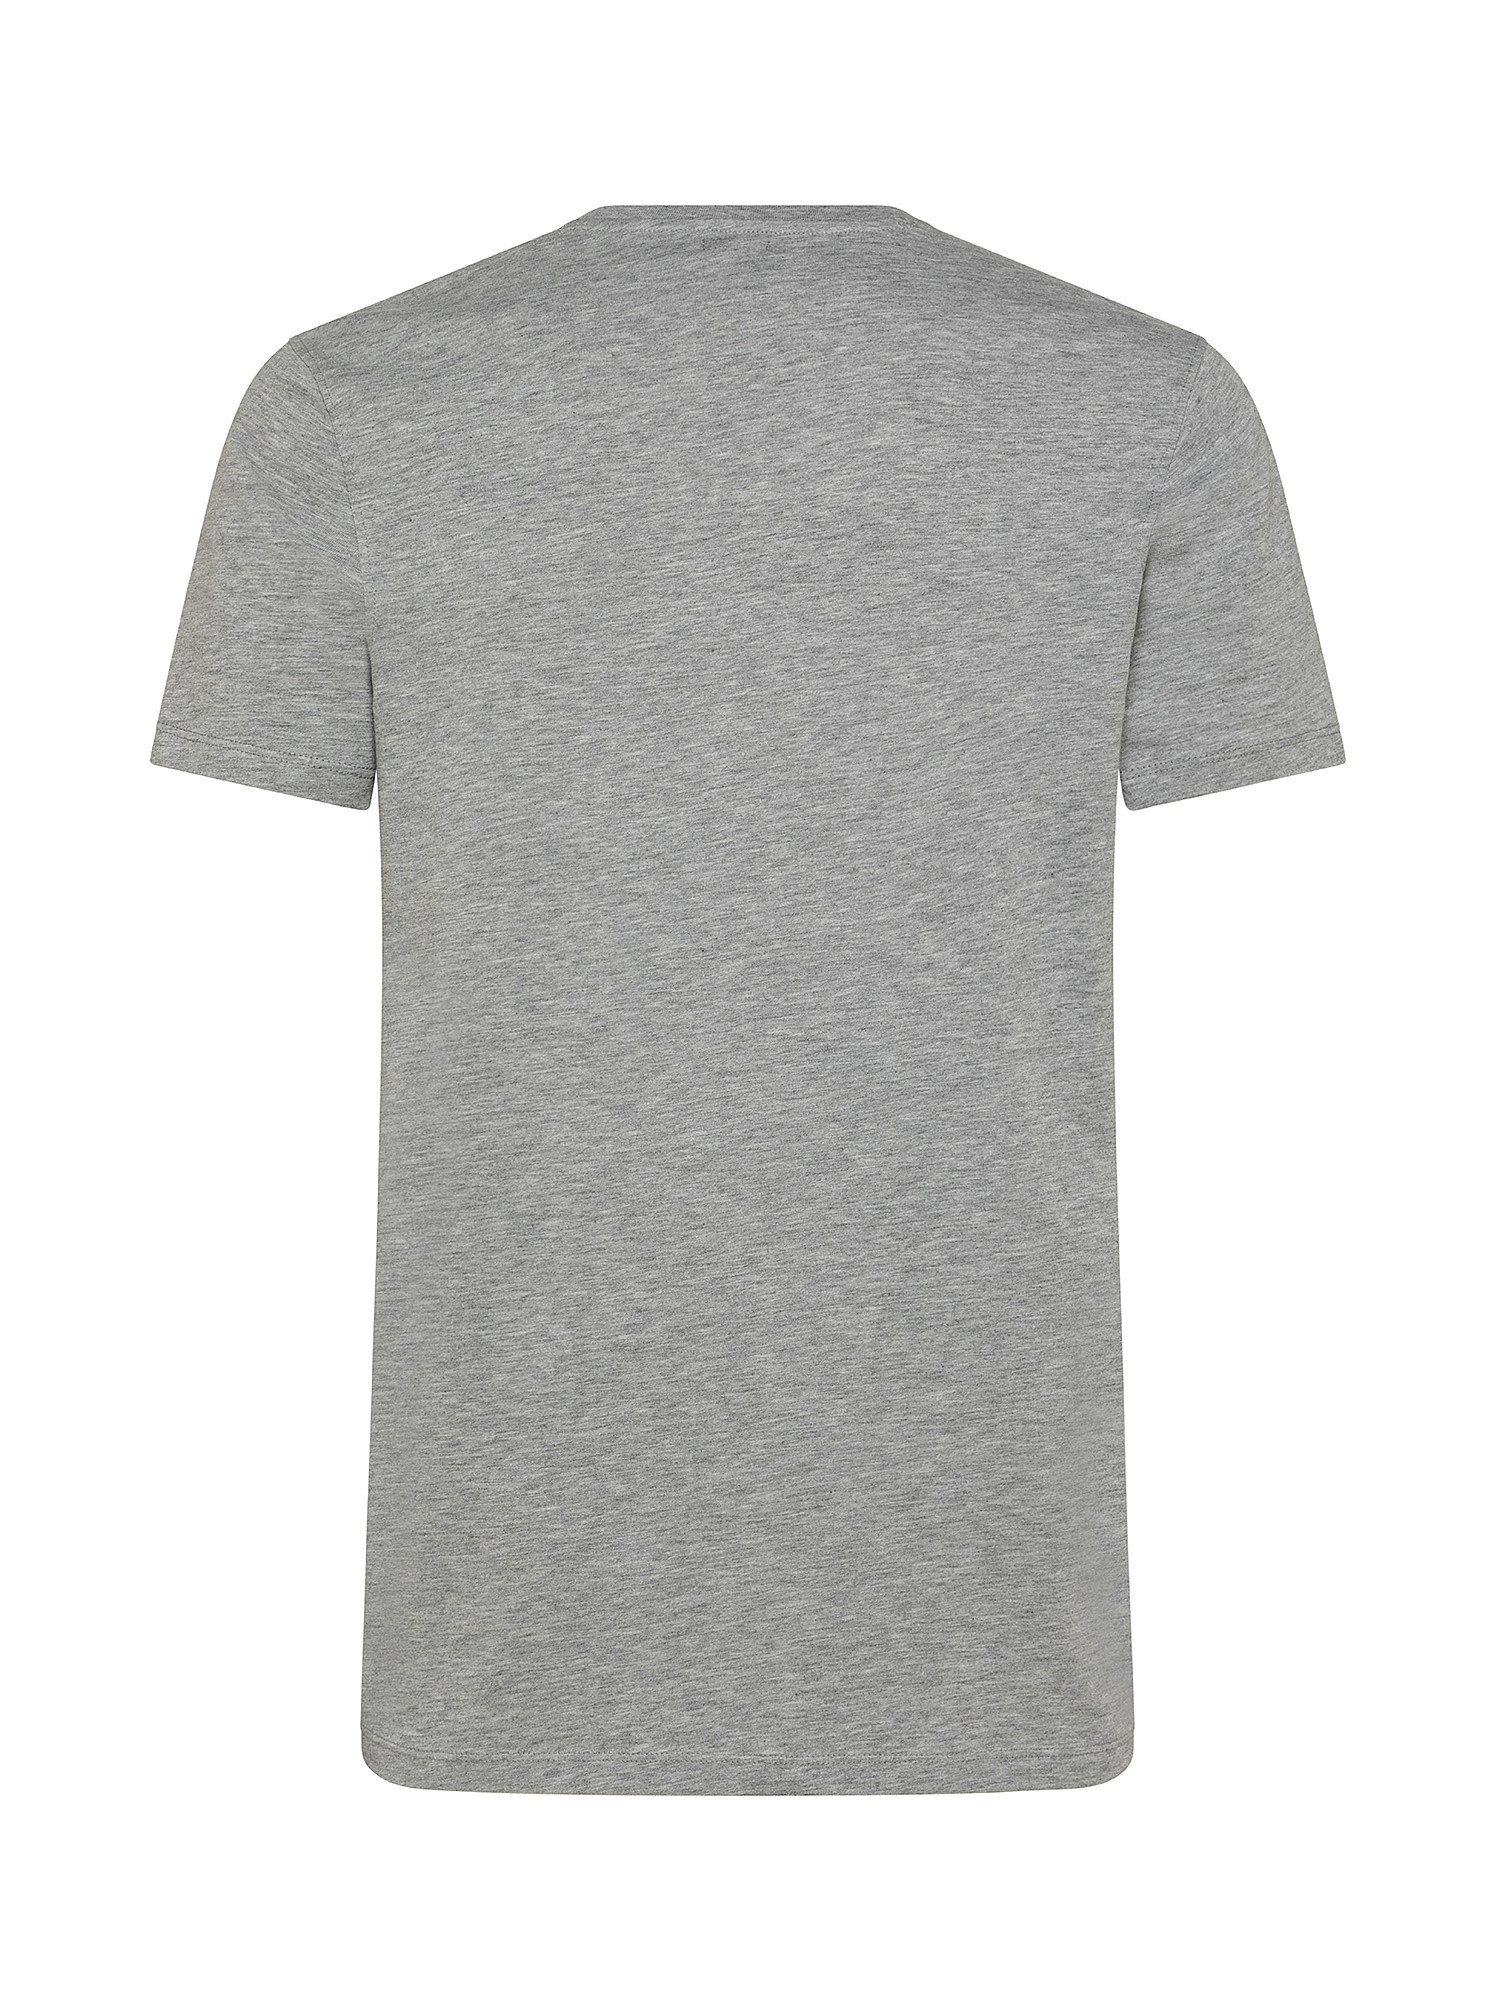 Luca D'Altieri - T-shirt scollo a V cotone supima, Grigio, large